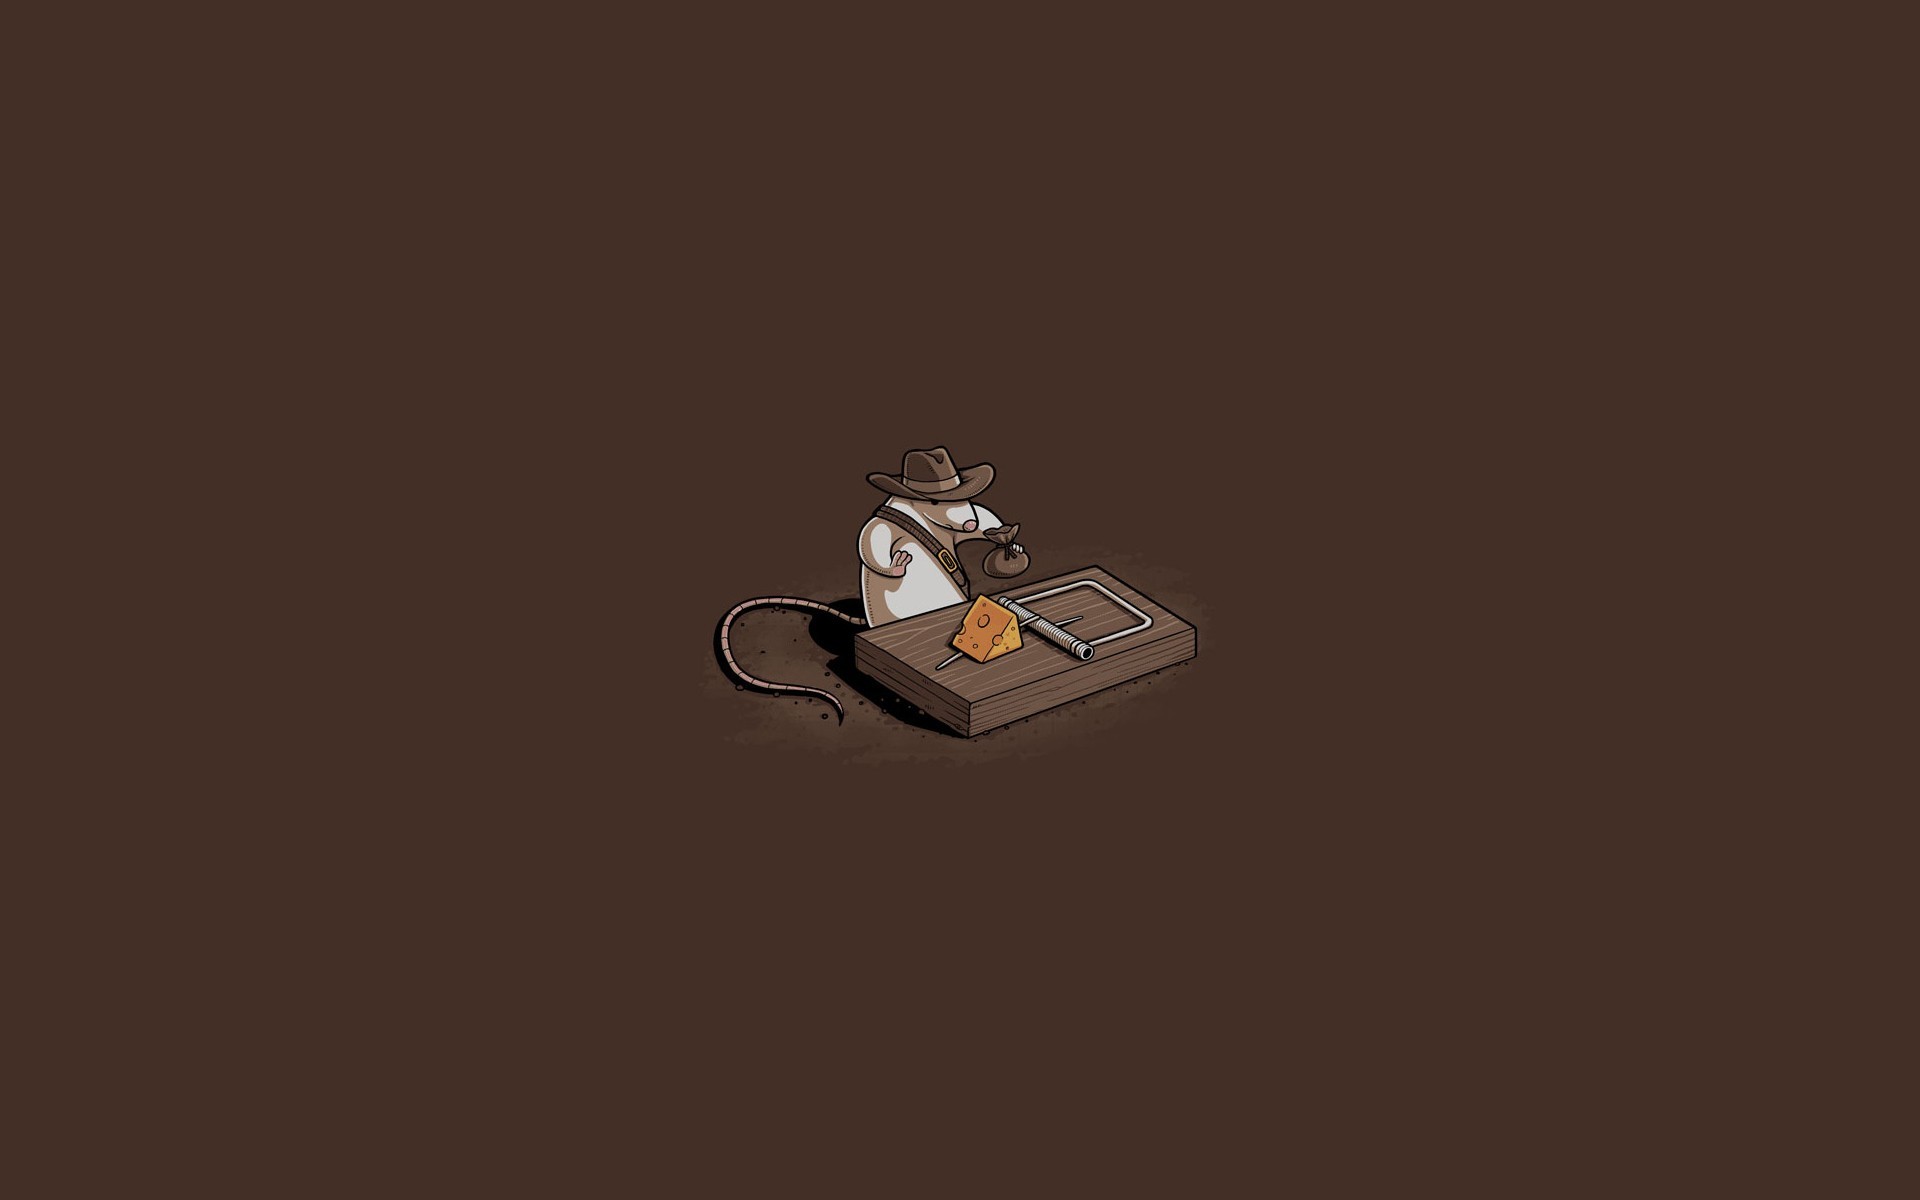 General 1920x1200 humor Indiana Jones mice minimalism parody brown background simple background animals mammals cheese food